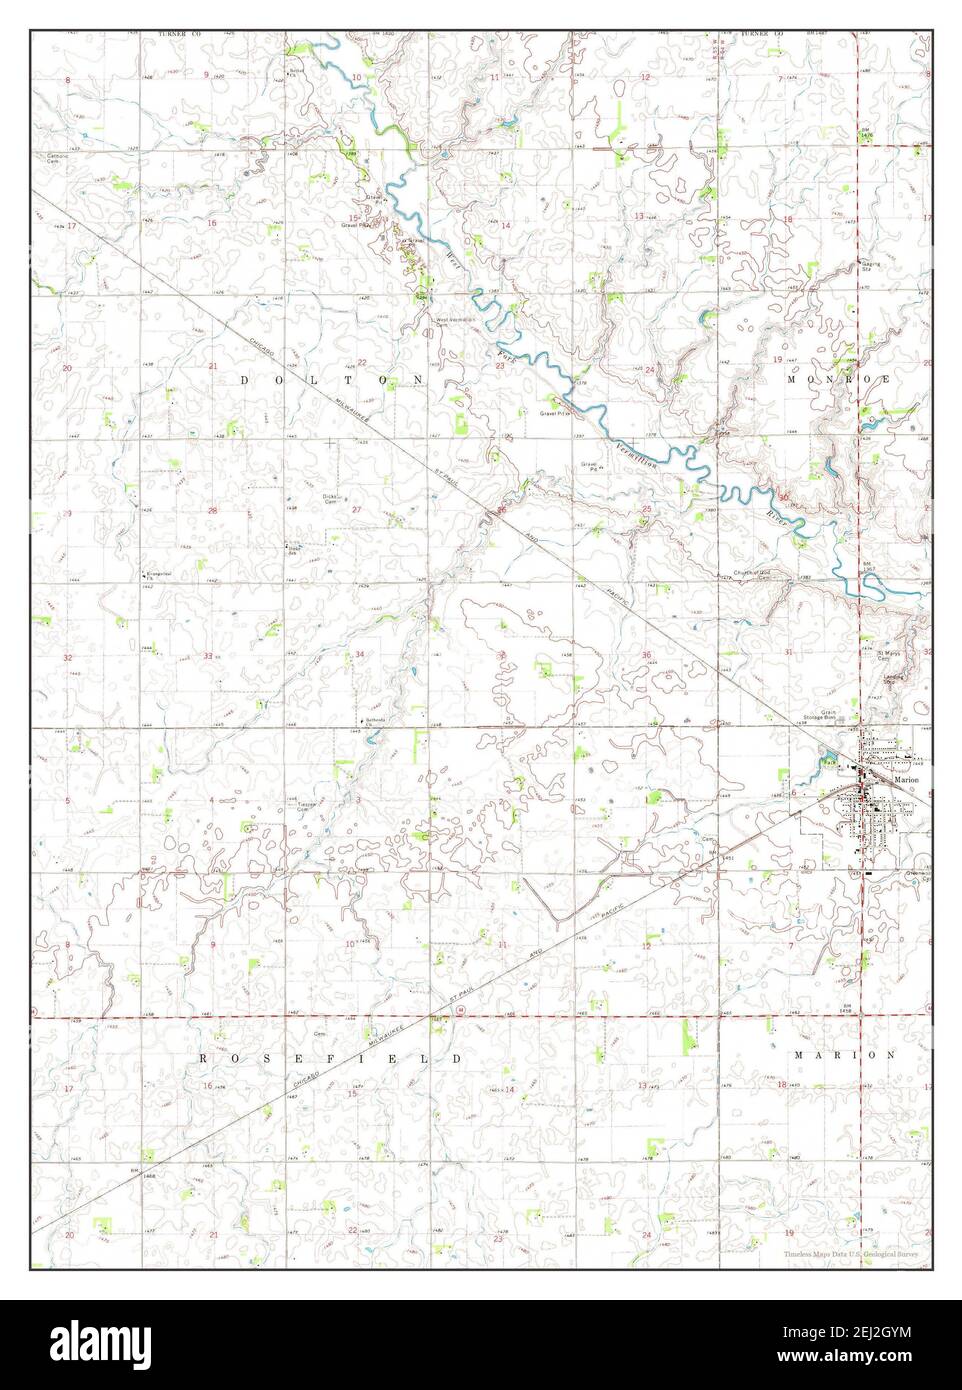 Marion, South Dakota, map 1970, 1:24000, United States of America by Timeless Maps, data U.S. Geological Survey Stock Photo